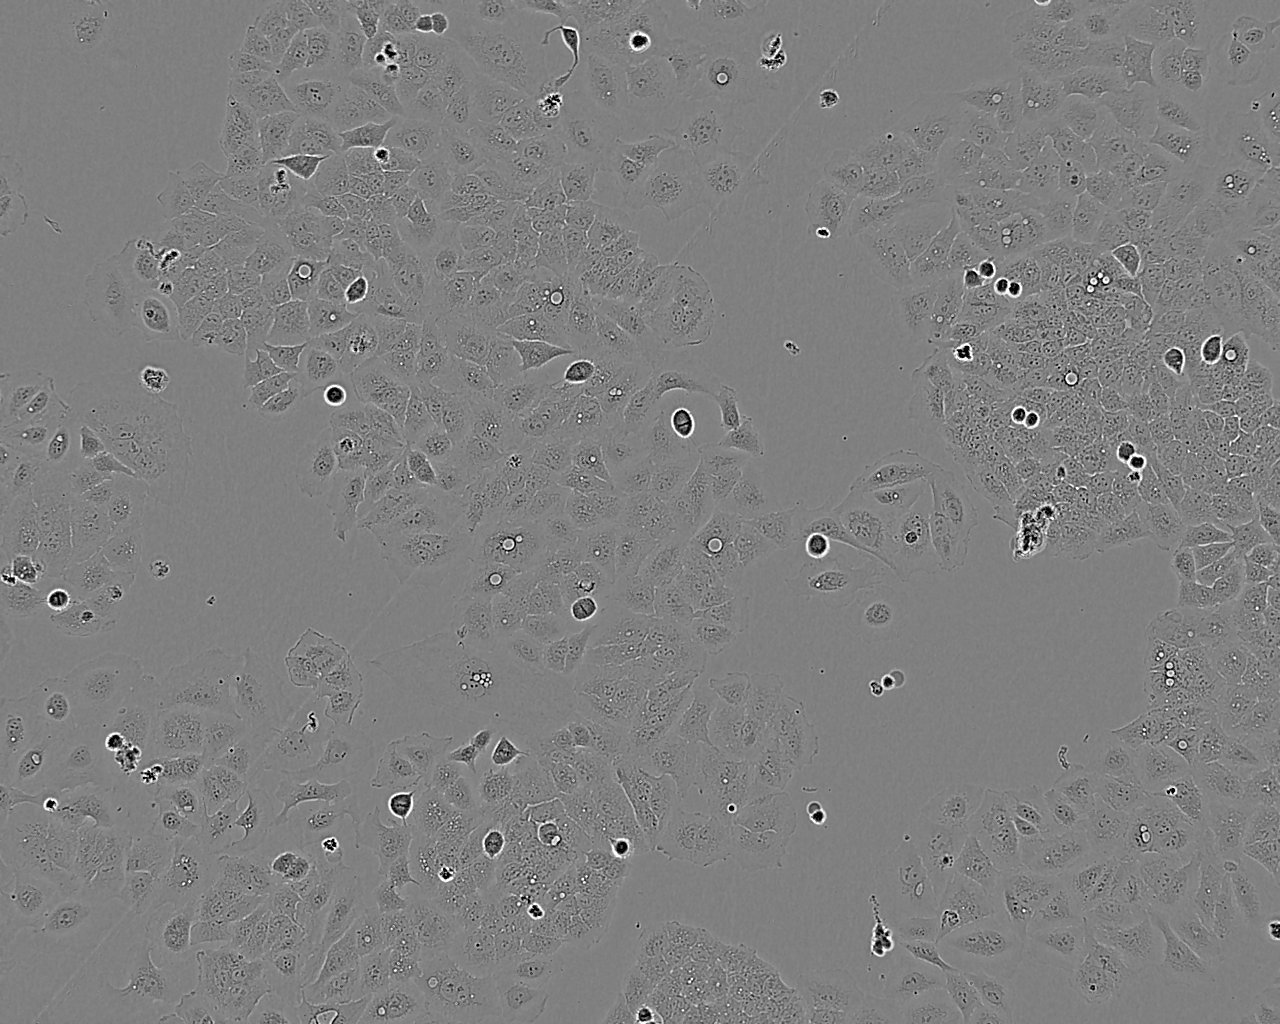 SNU-886 Cell:人肝癌细胞系,SNU-886 Cell